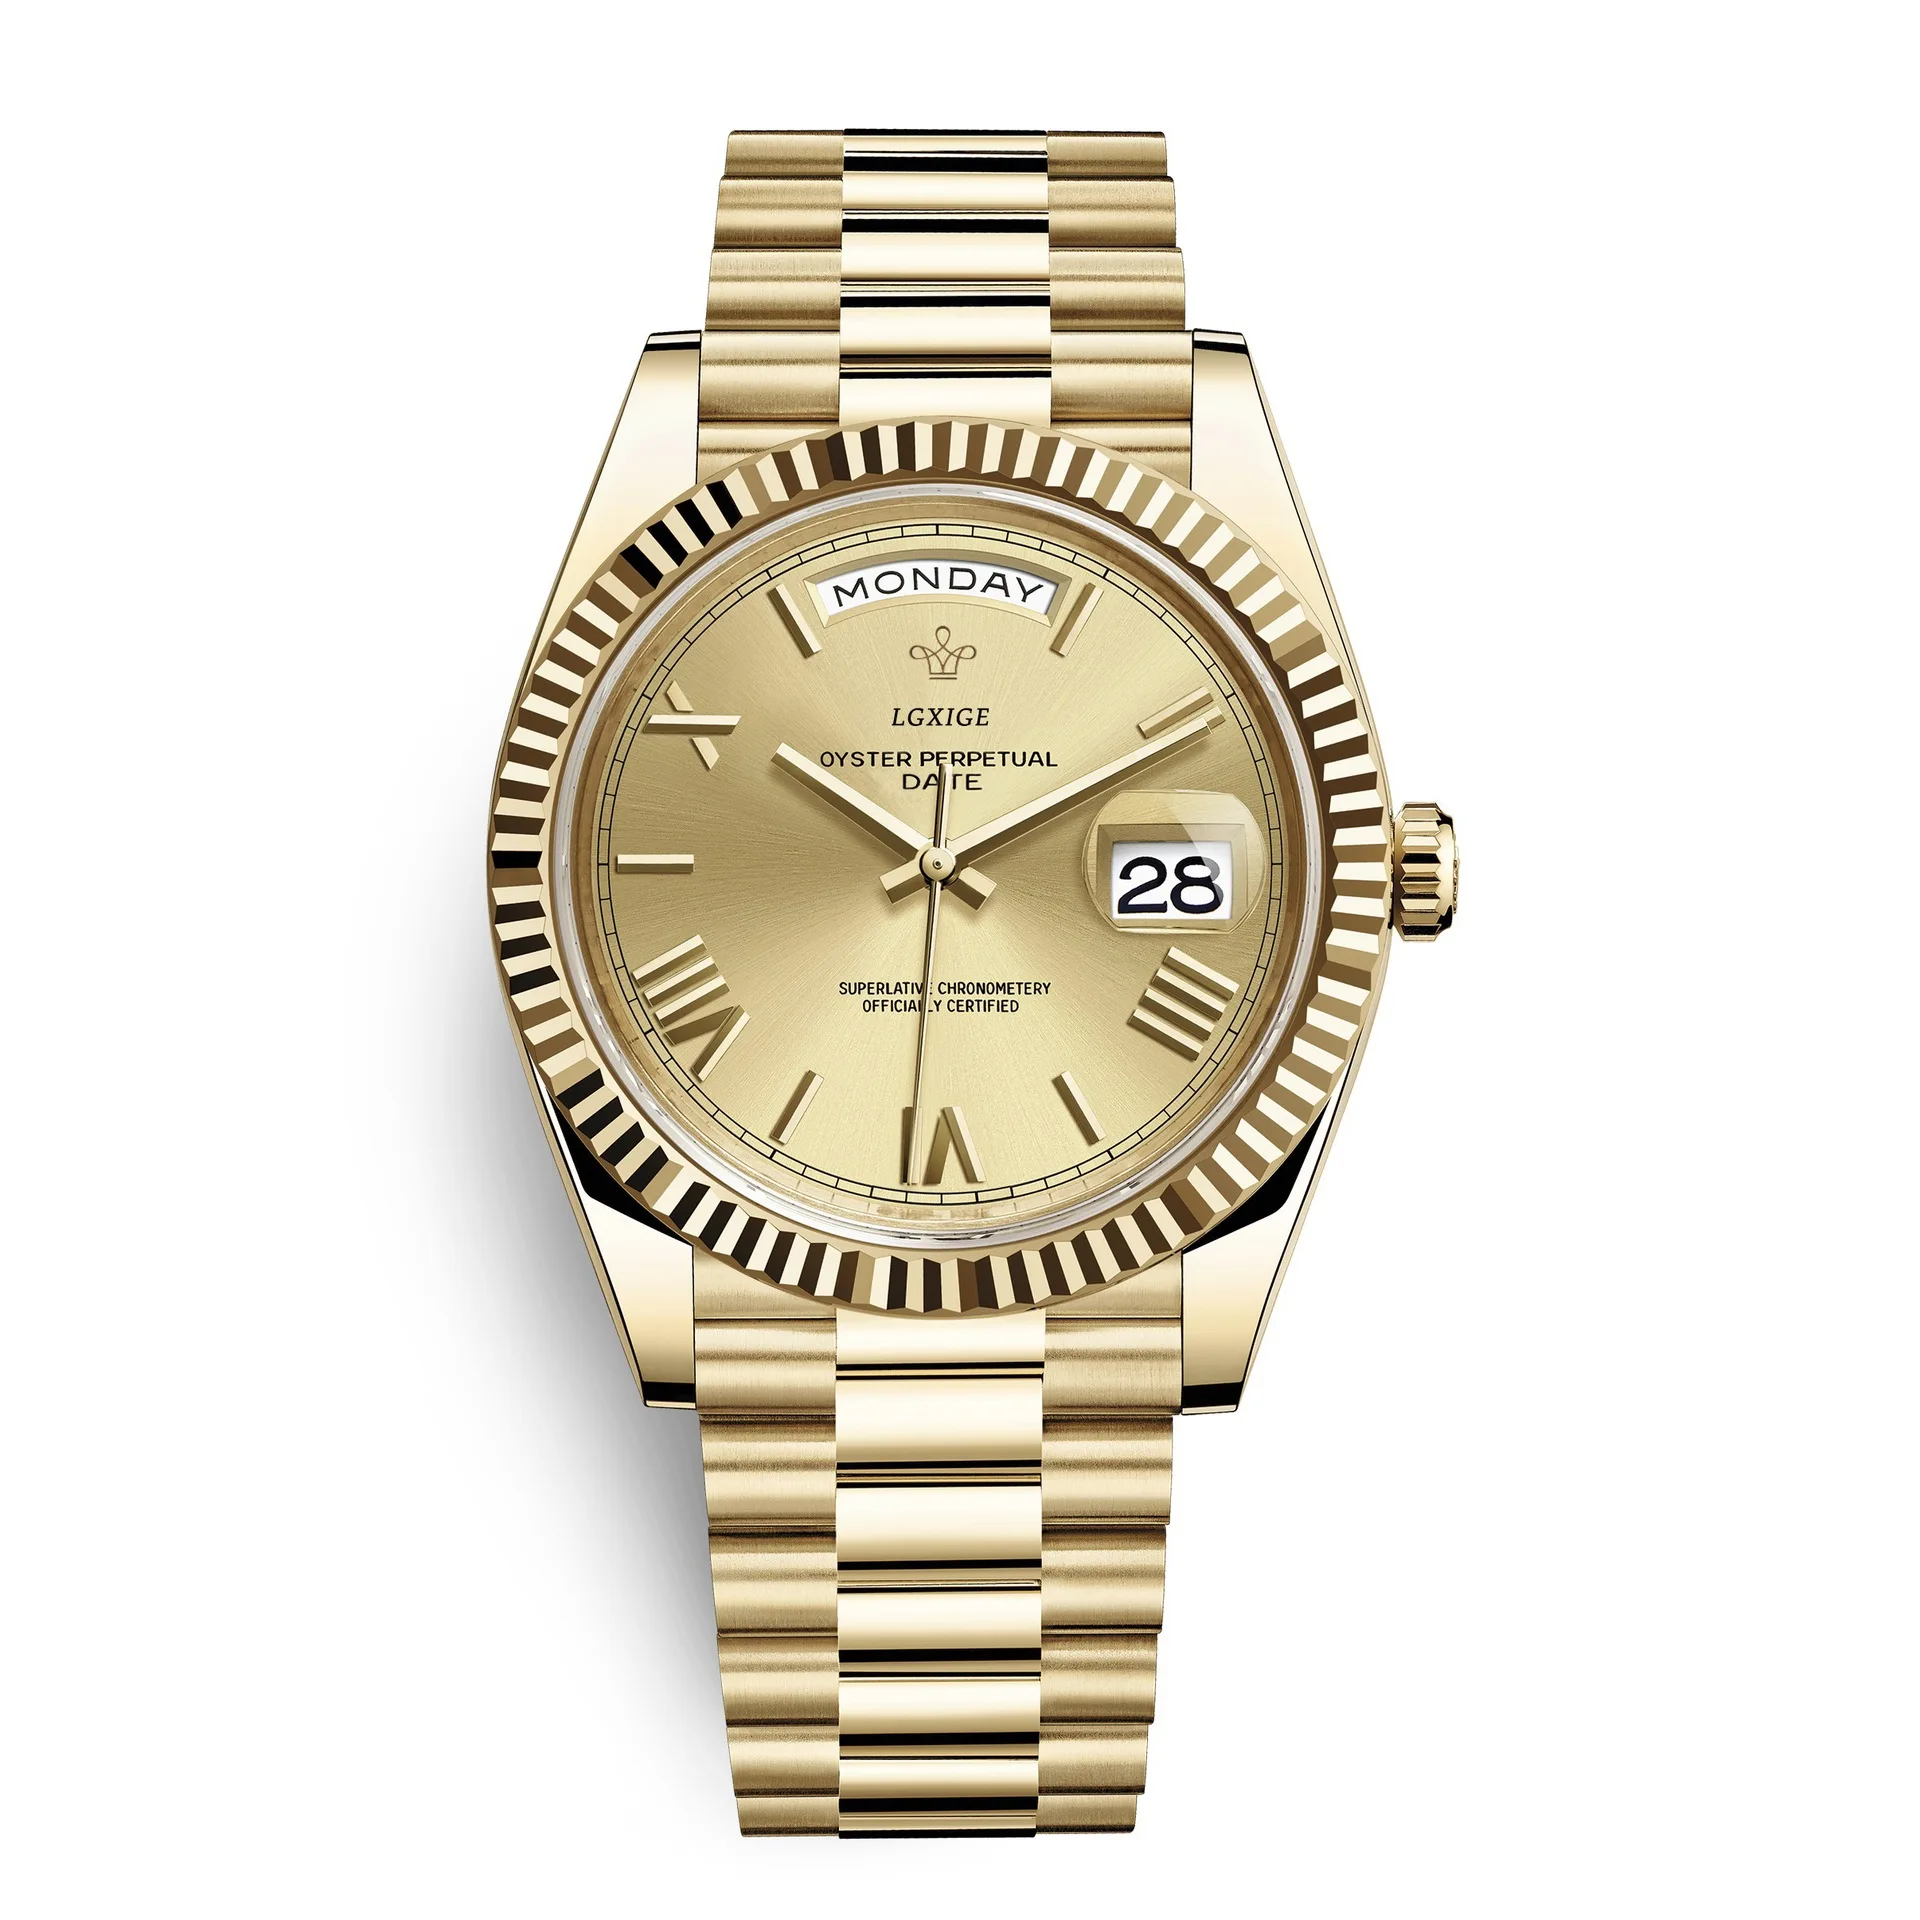 

LGXIGE New Luxury watch Amazon Top Sale Stainless Steel Strap Men wrist watch Sunday Calendar for Branded Watch